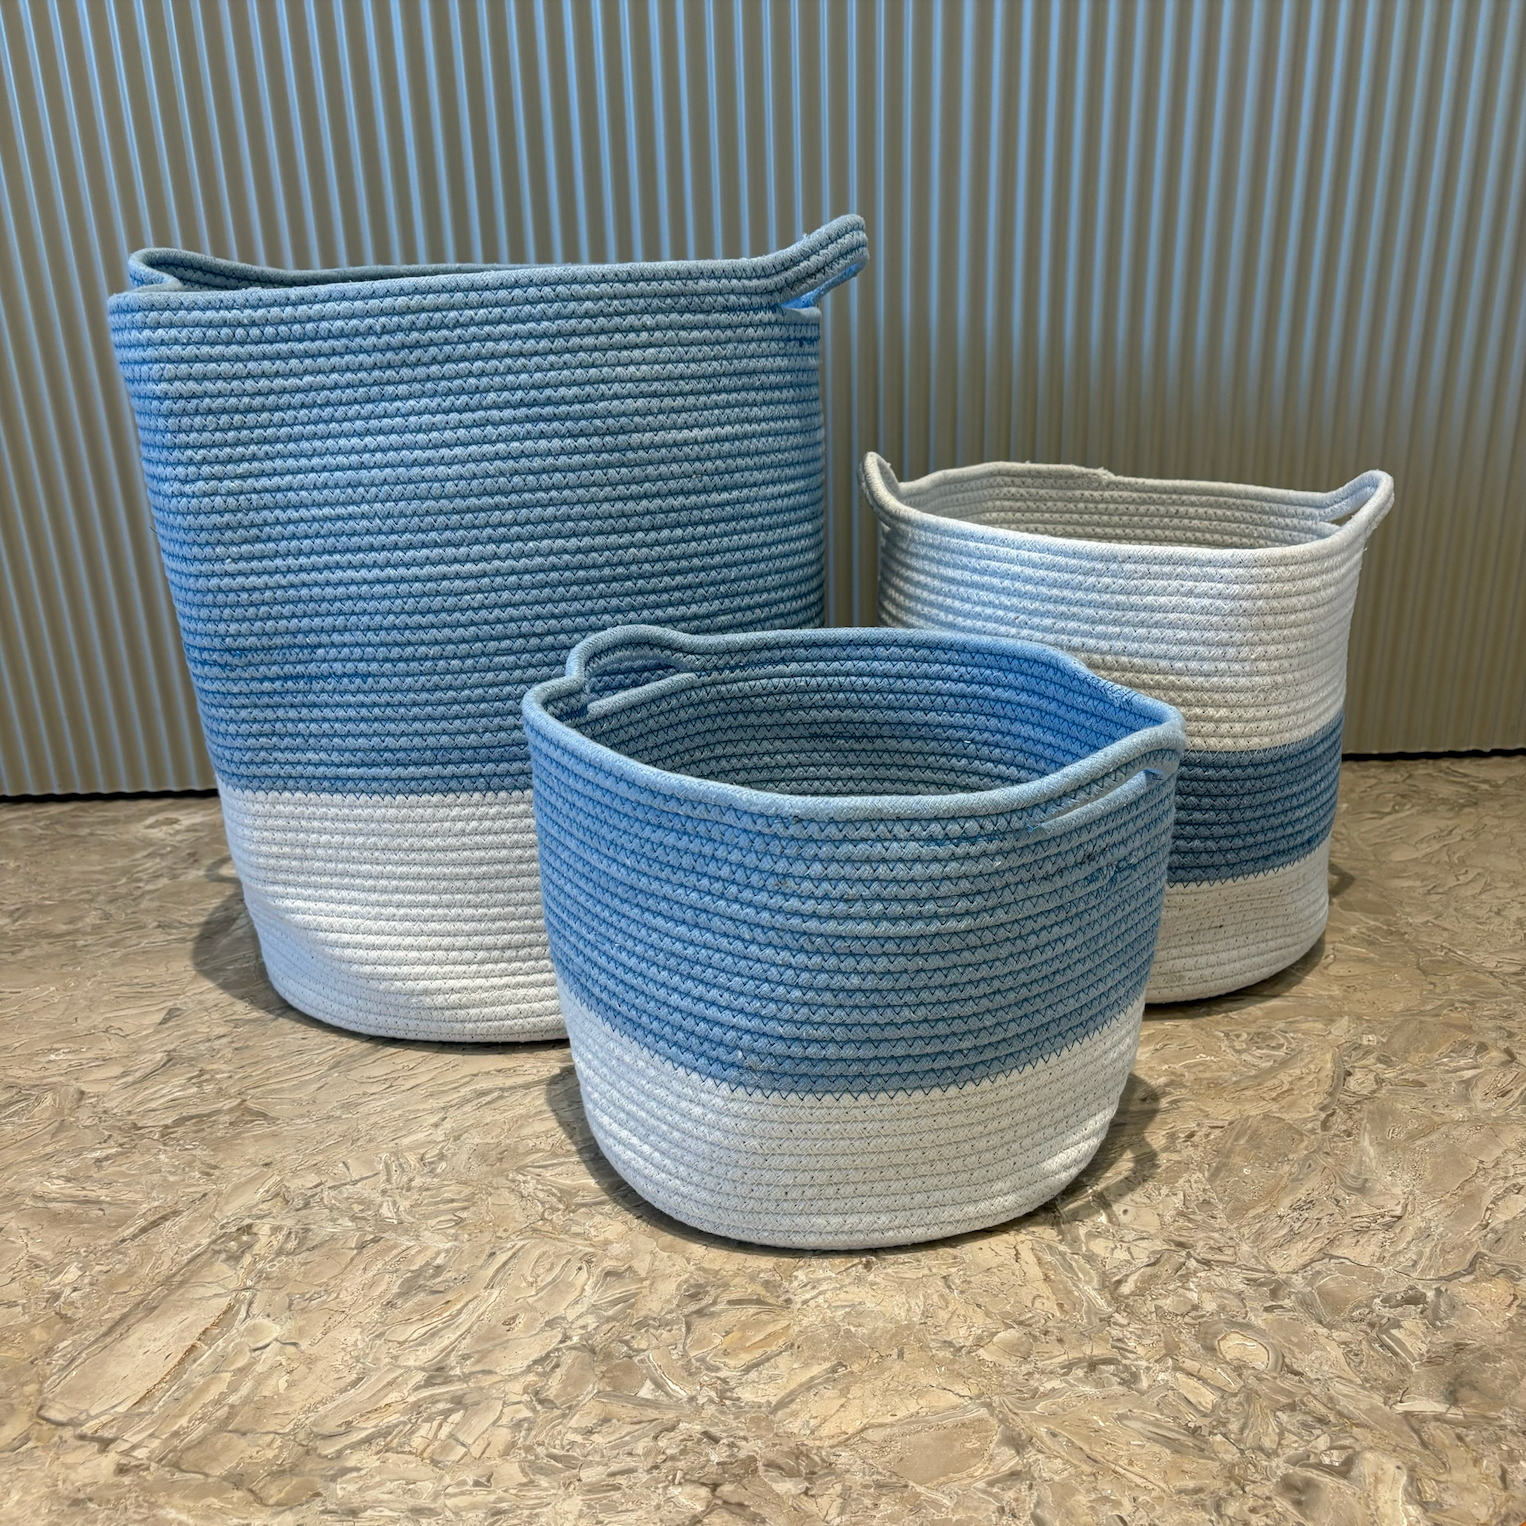 Personalised Storage Basket - Large, Blue <br> CLEARANCE SALE